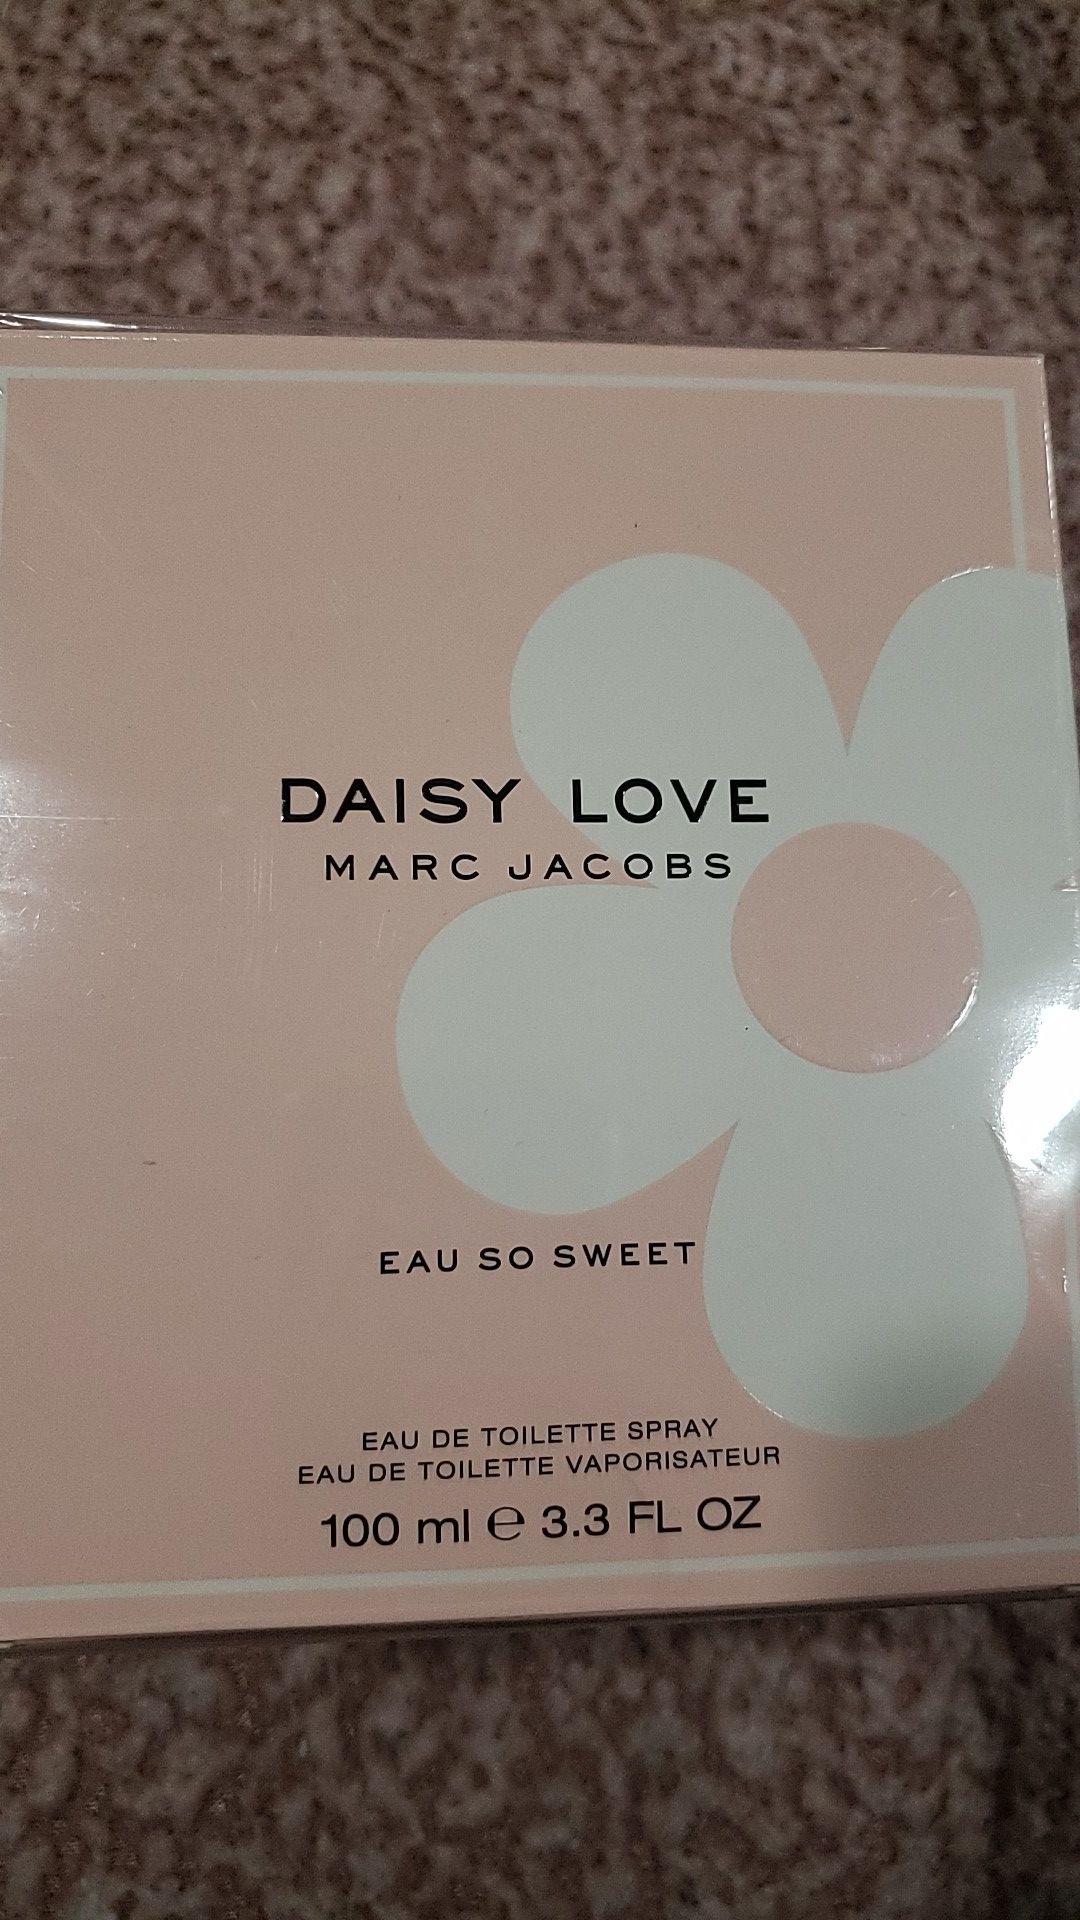 Daisy love Marc Jacobs eau so sweet eau de toilette spray 100ml